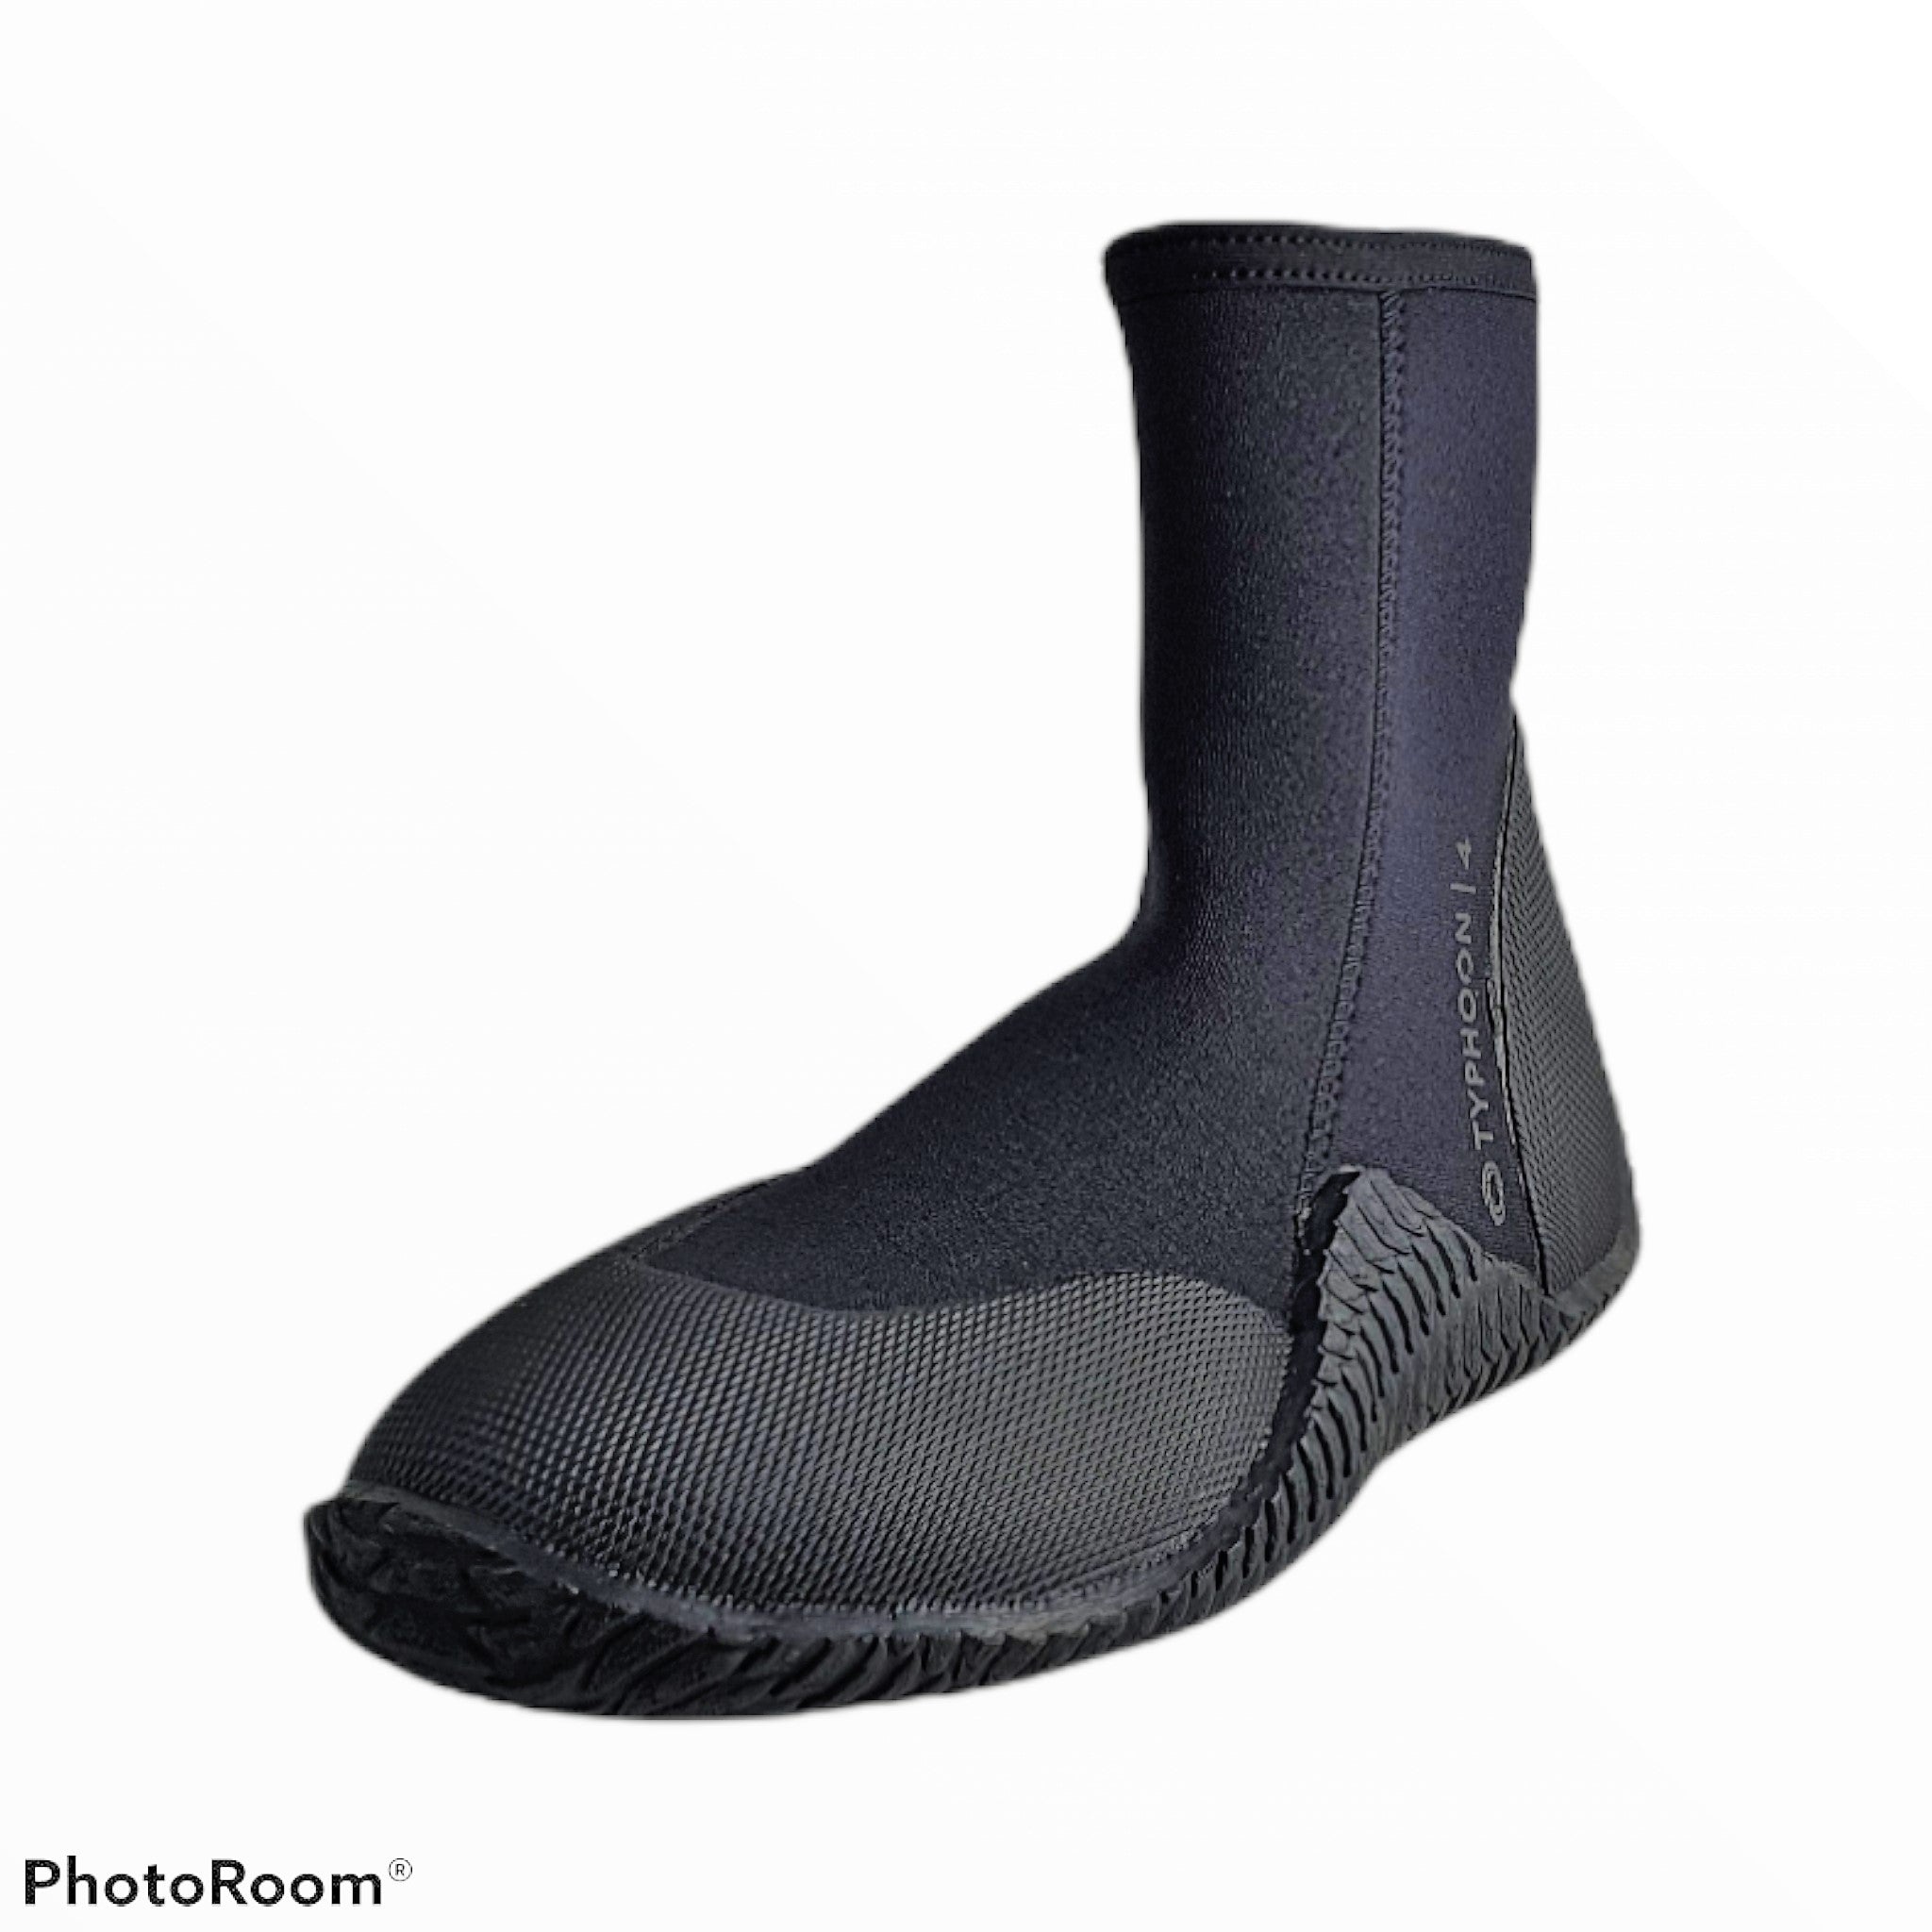 Typhoon Wetsuit Boots 